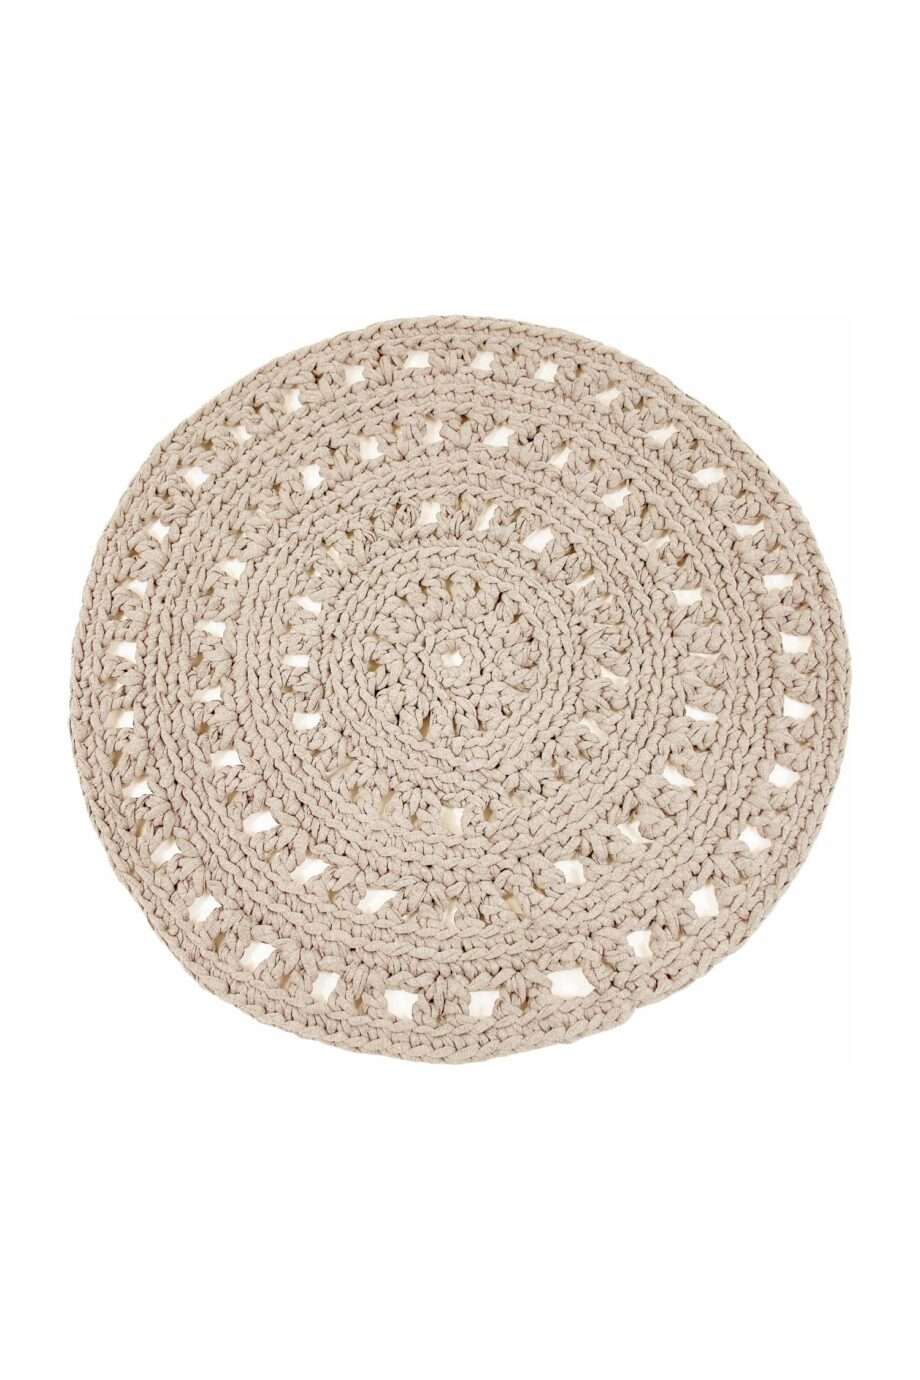 arab linen crochet cotton floor mat small